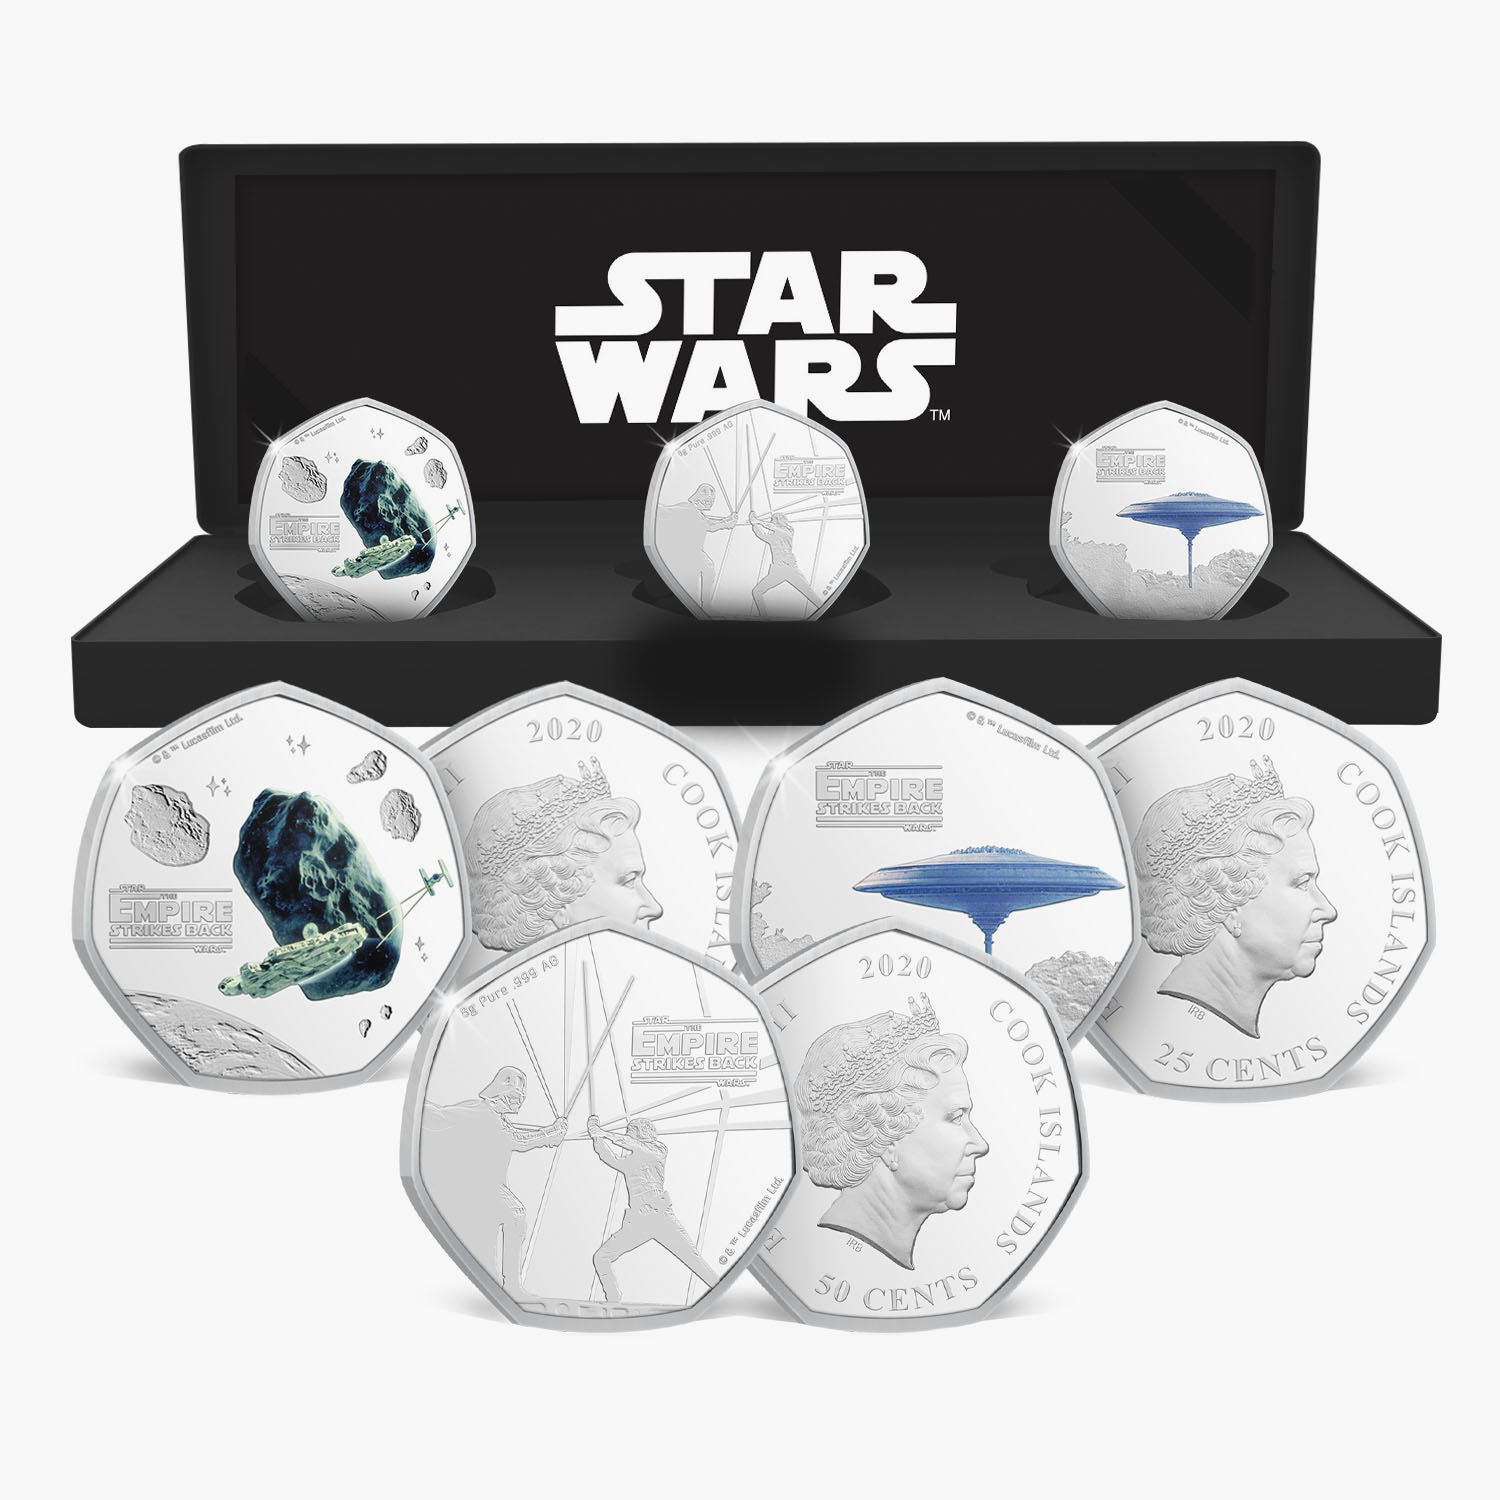 The Star Wars Empire Strikes Back 40th Anniversary Silver Box Set